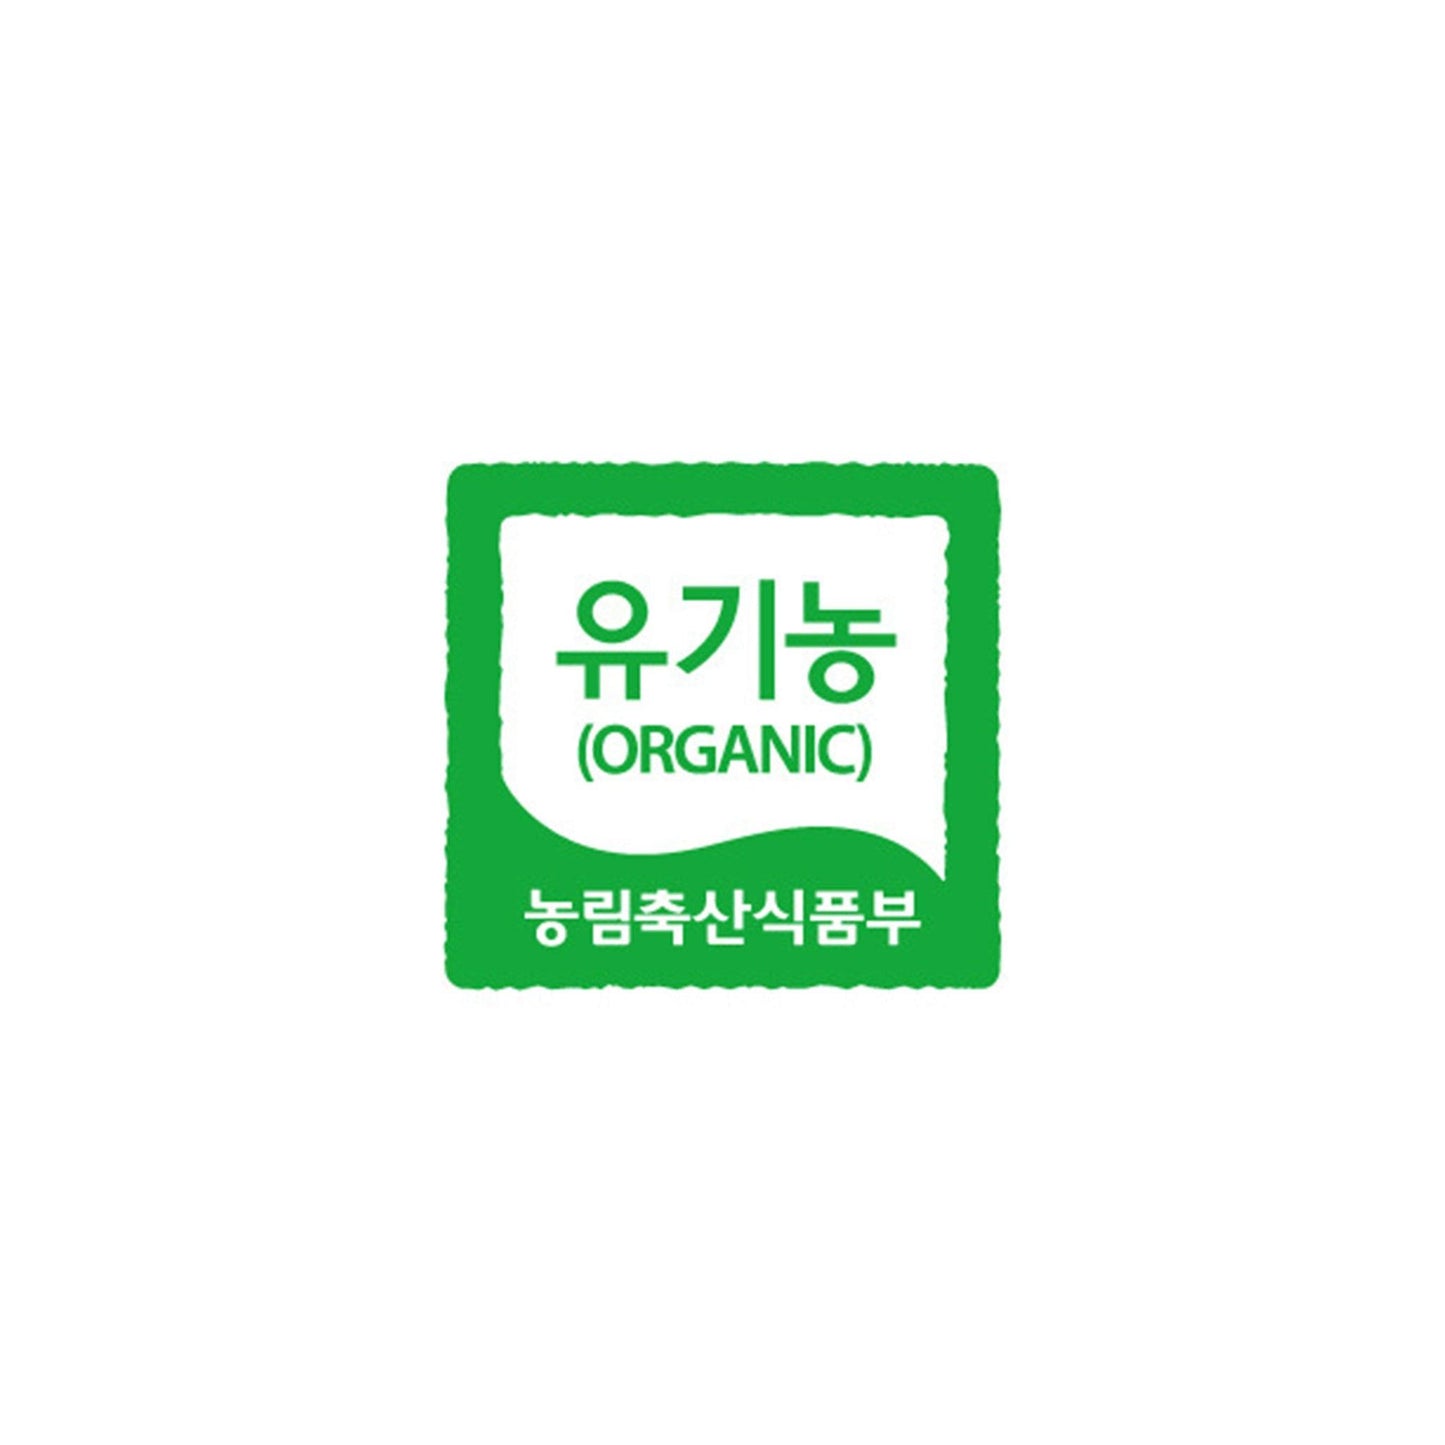 Organic Rice Powder Frying Batter Mix - Kim'C Market